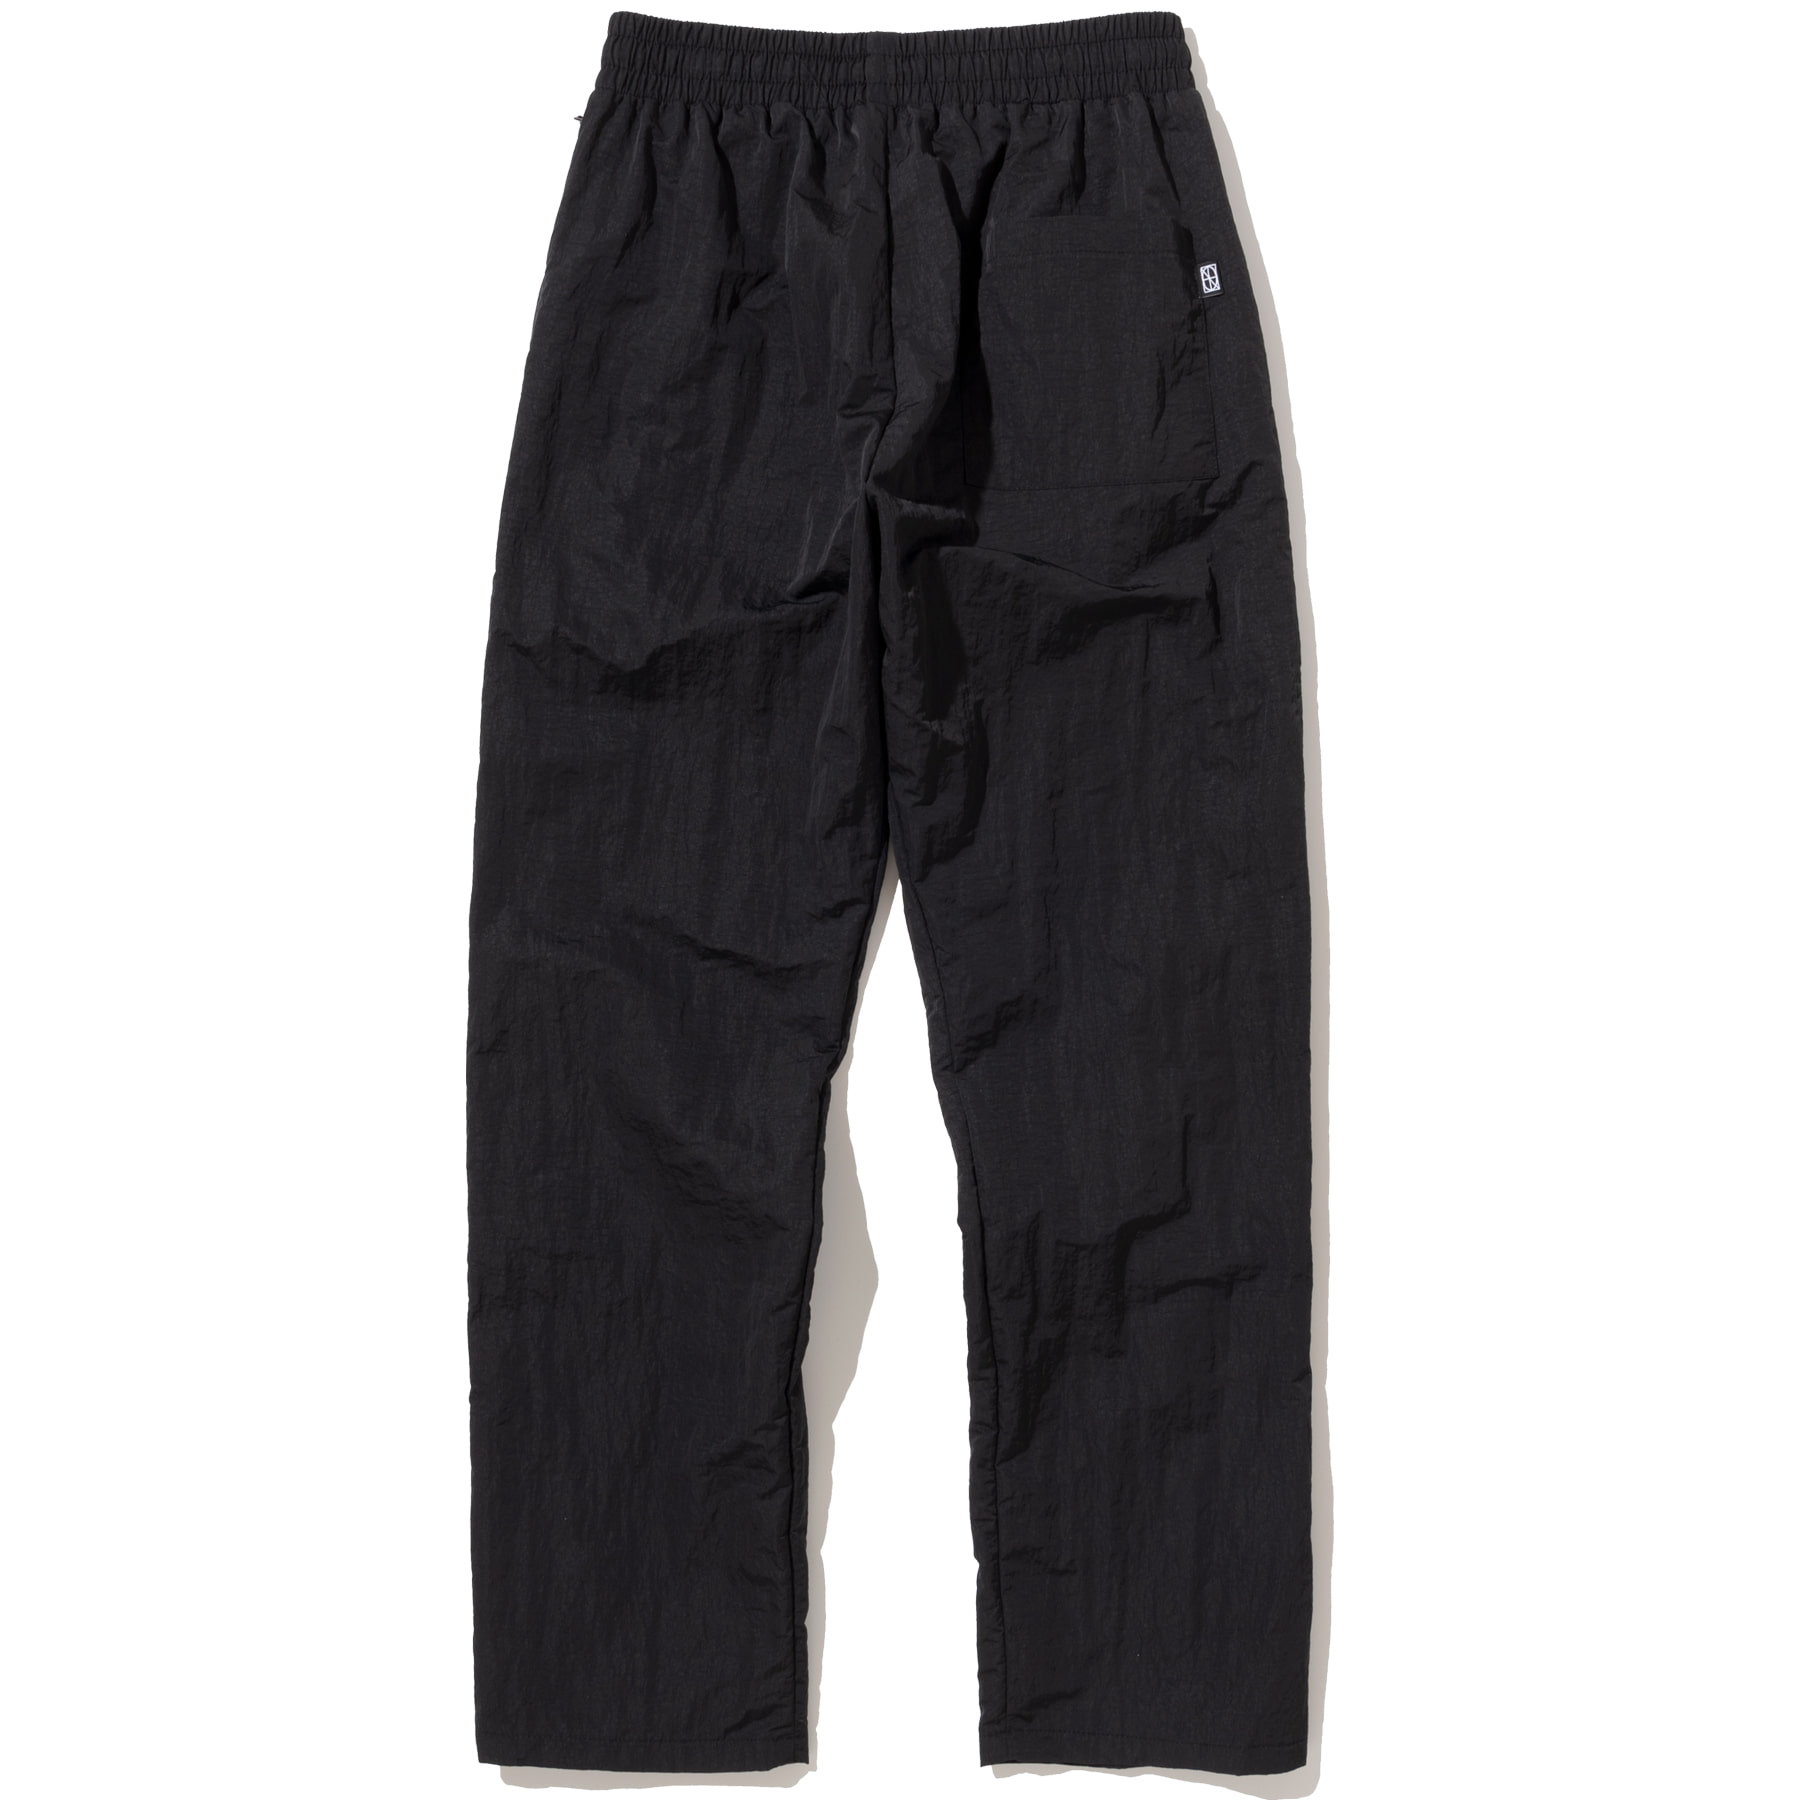 Two Way Side Zipper Nylon Pants - Black,NOT4NERD